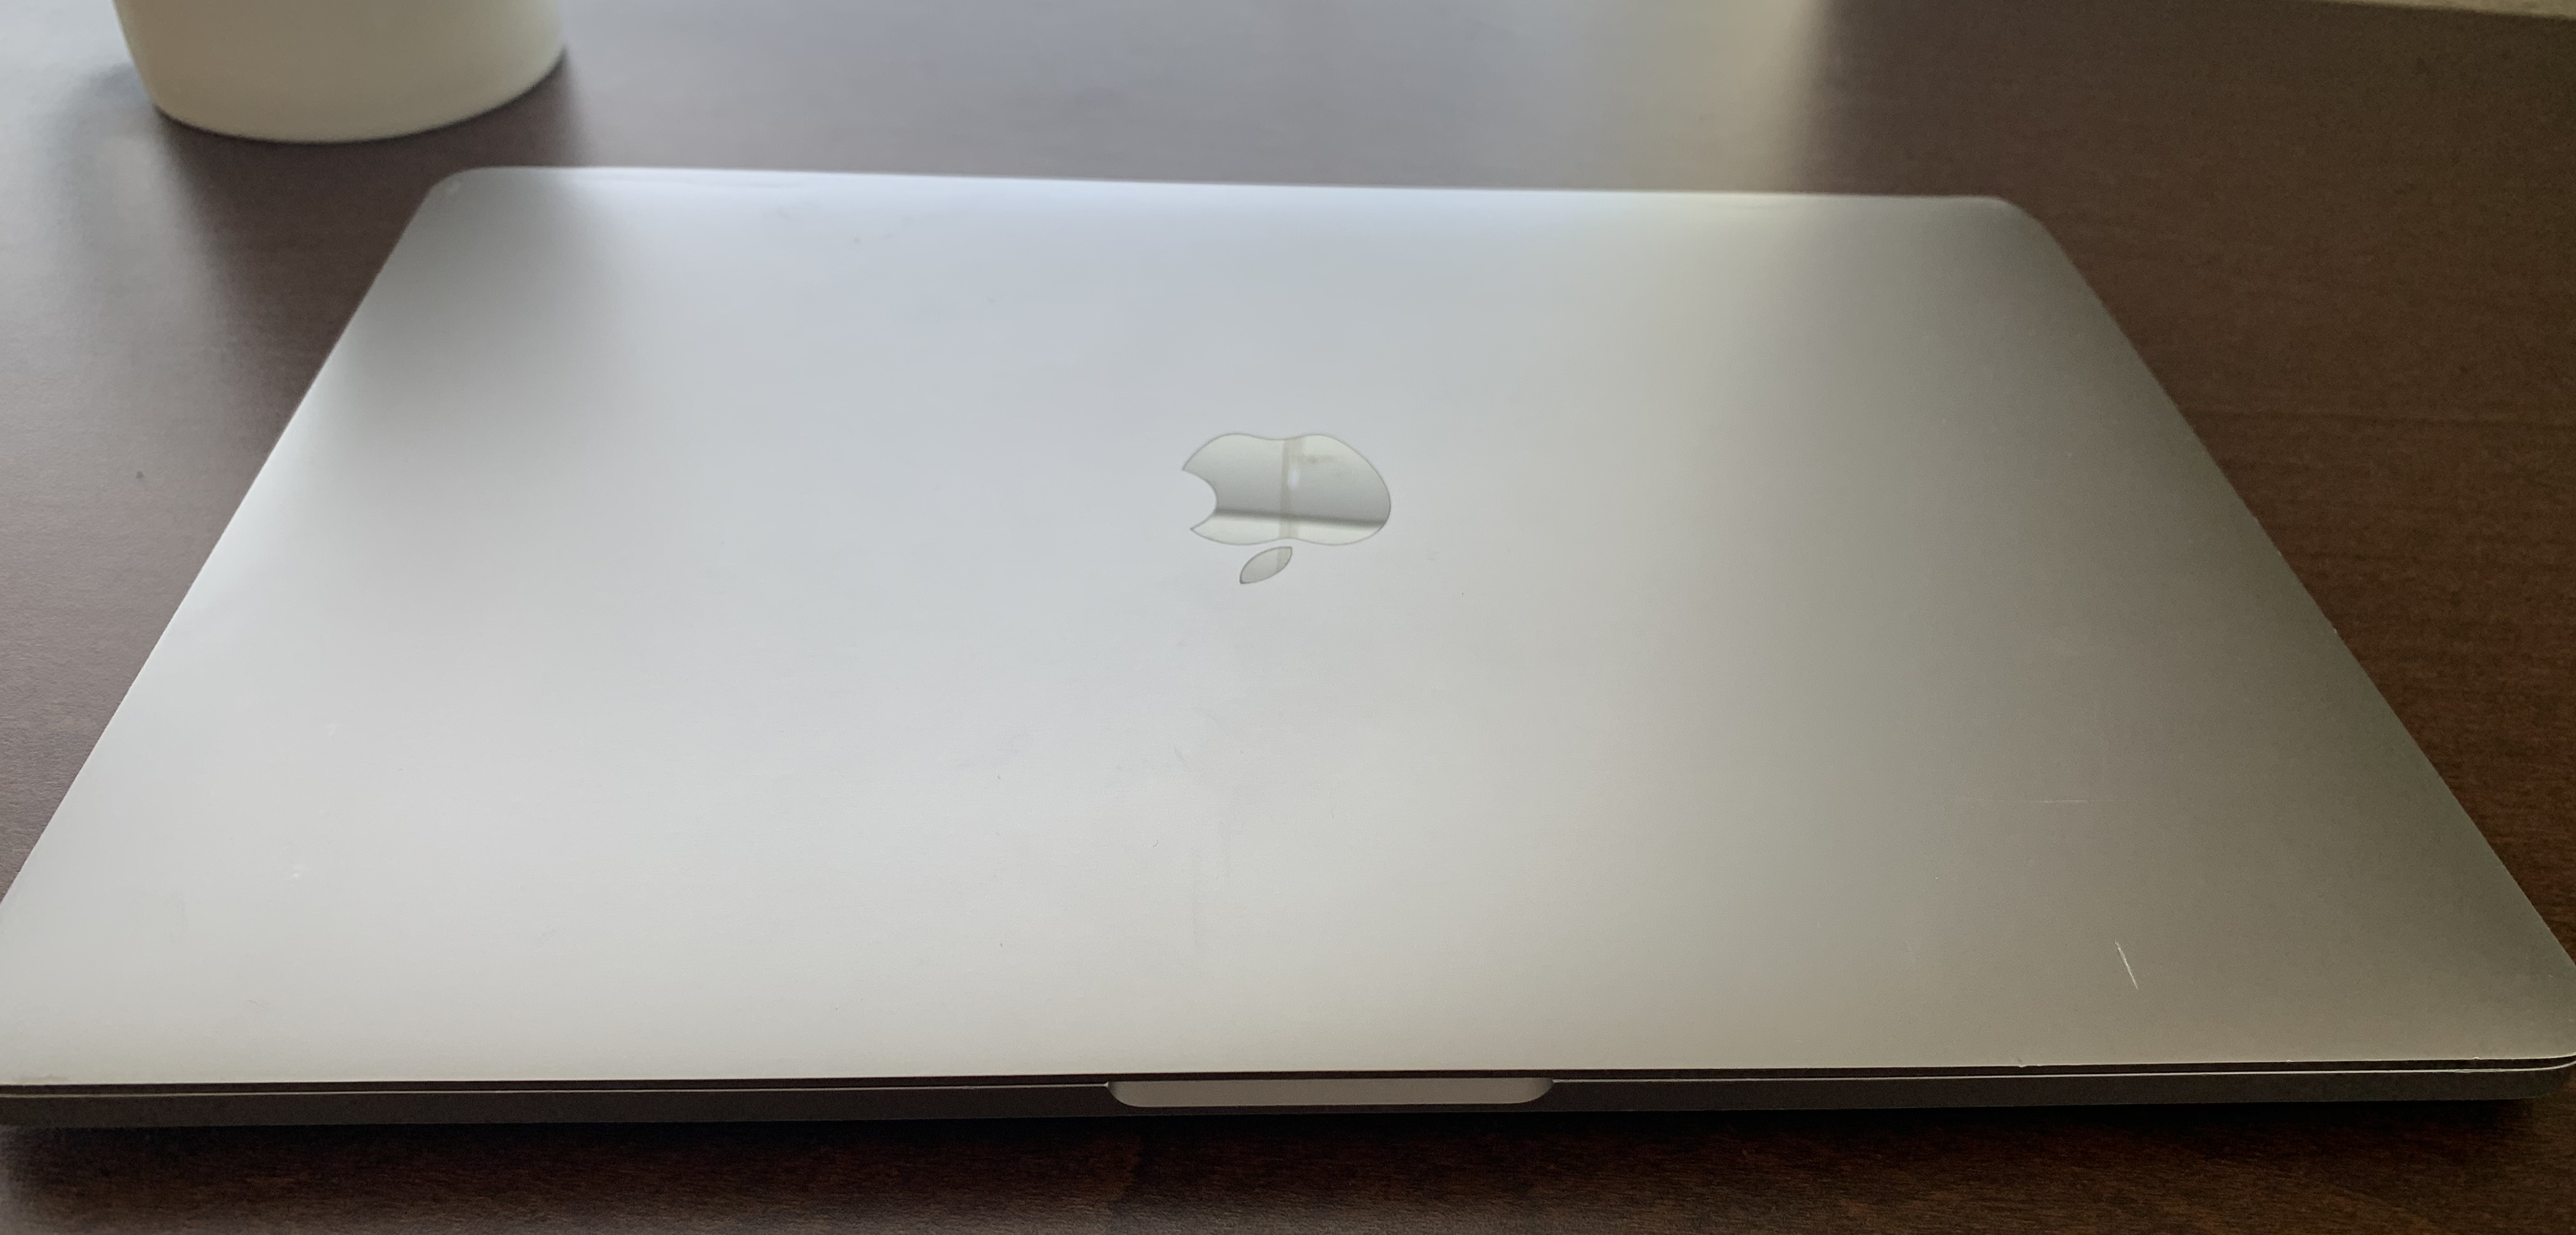 a space-gray macbook, closed shut. the metallic apple logo has a few scratches